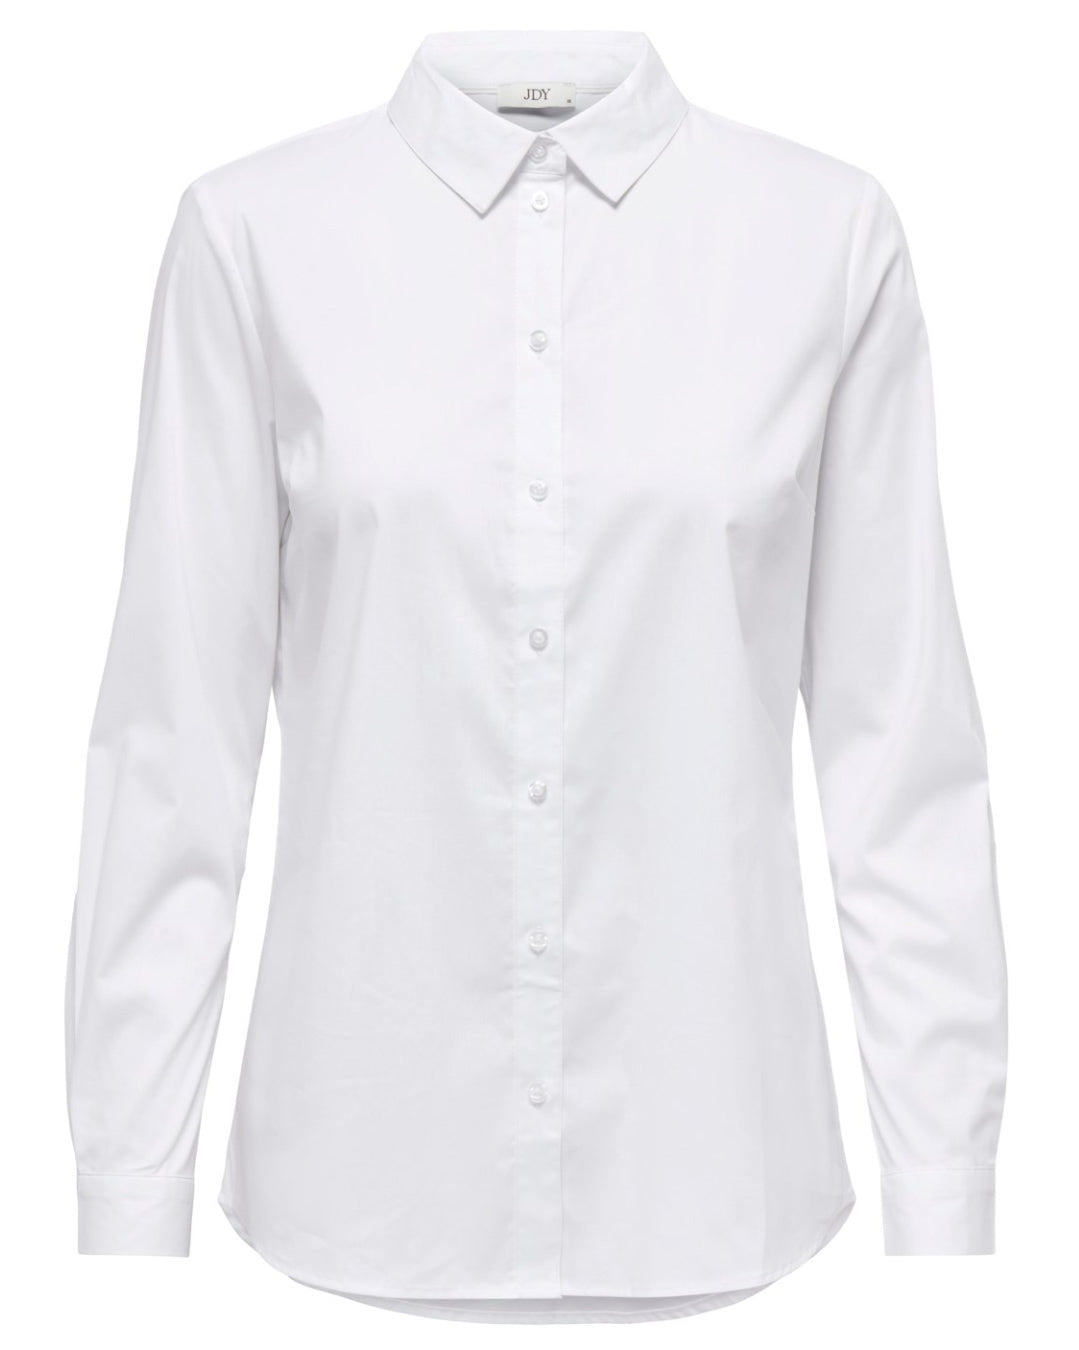 Camisa blanca basica